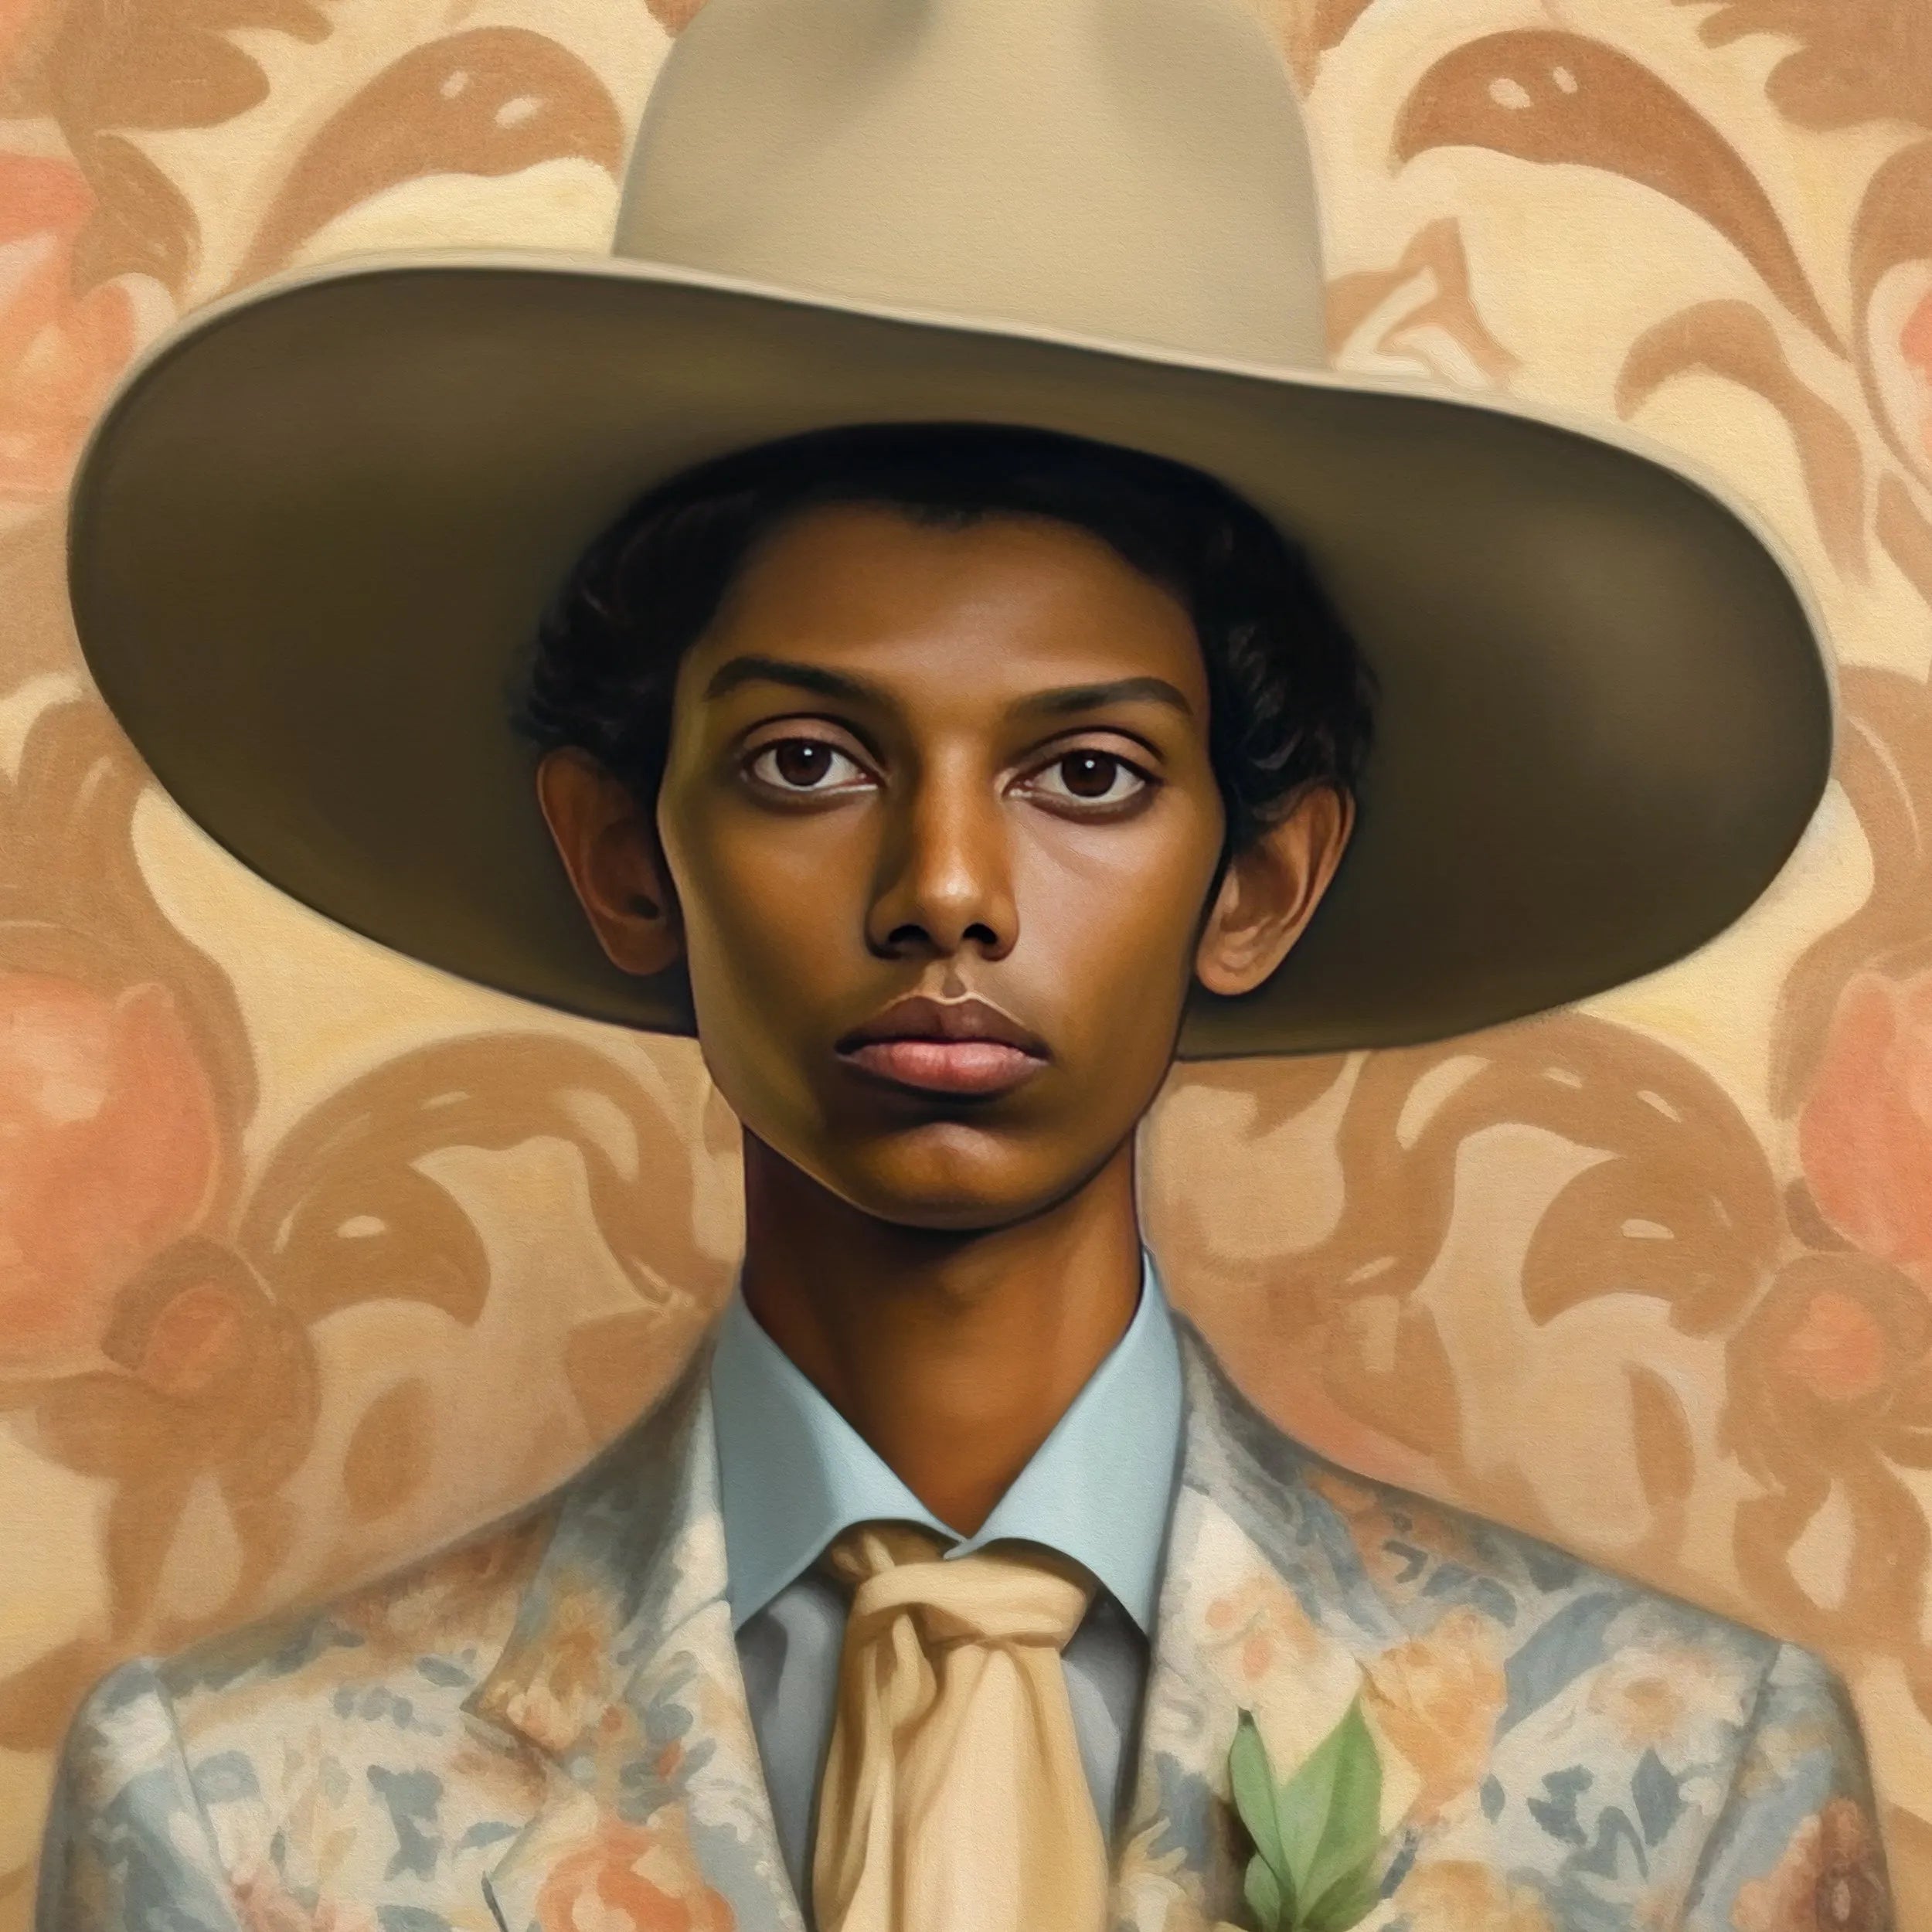 Mallaravan The Transgender Cowboy - F2m Dandy Transman Art - Posters Prints & Visual Artwork - Aesthetic Art